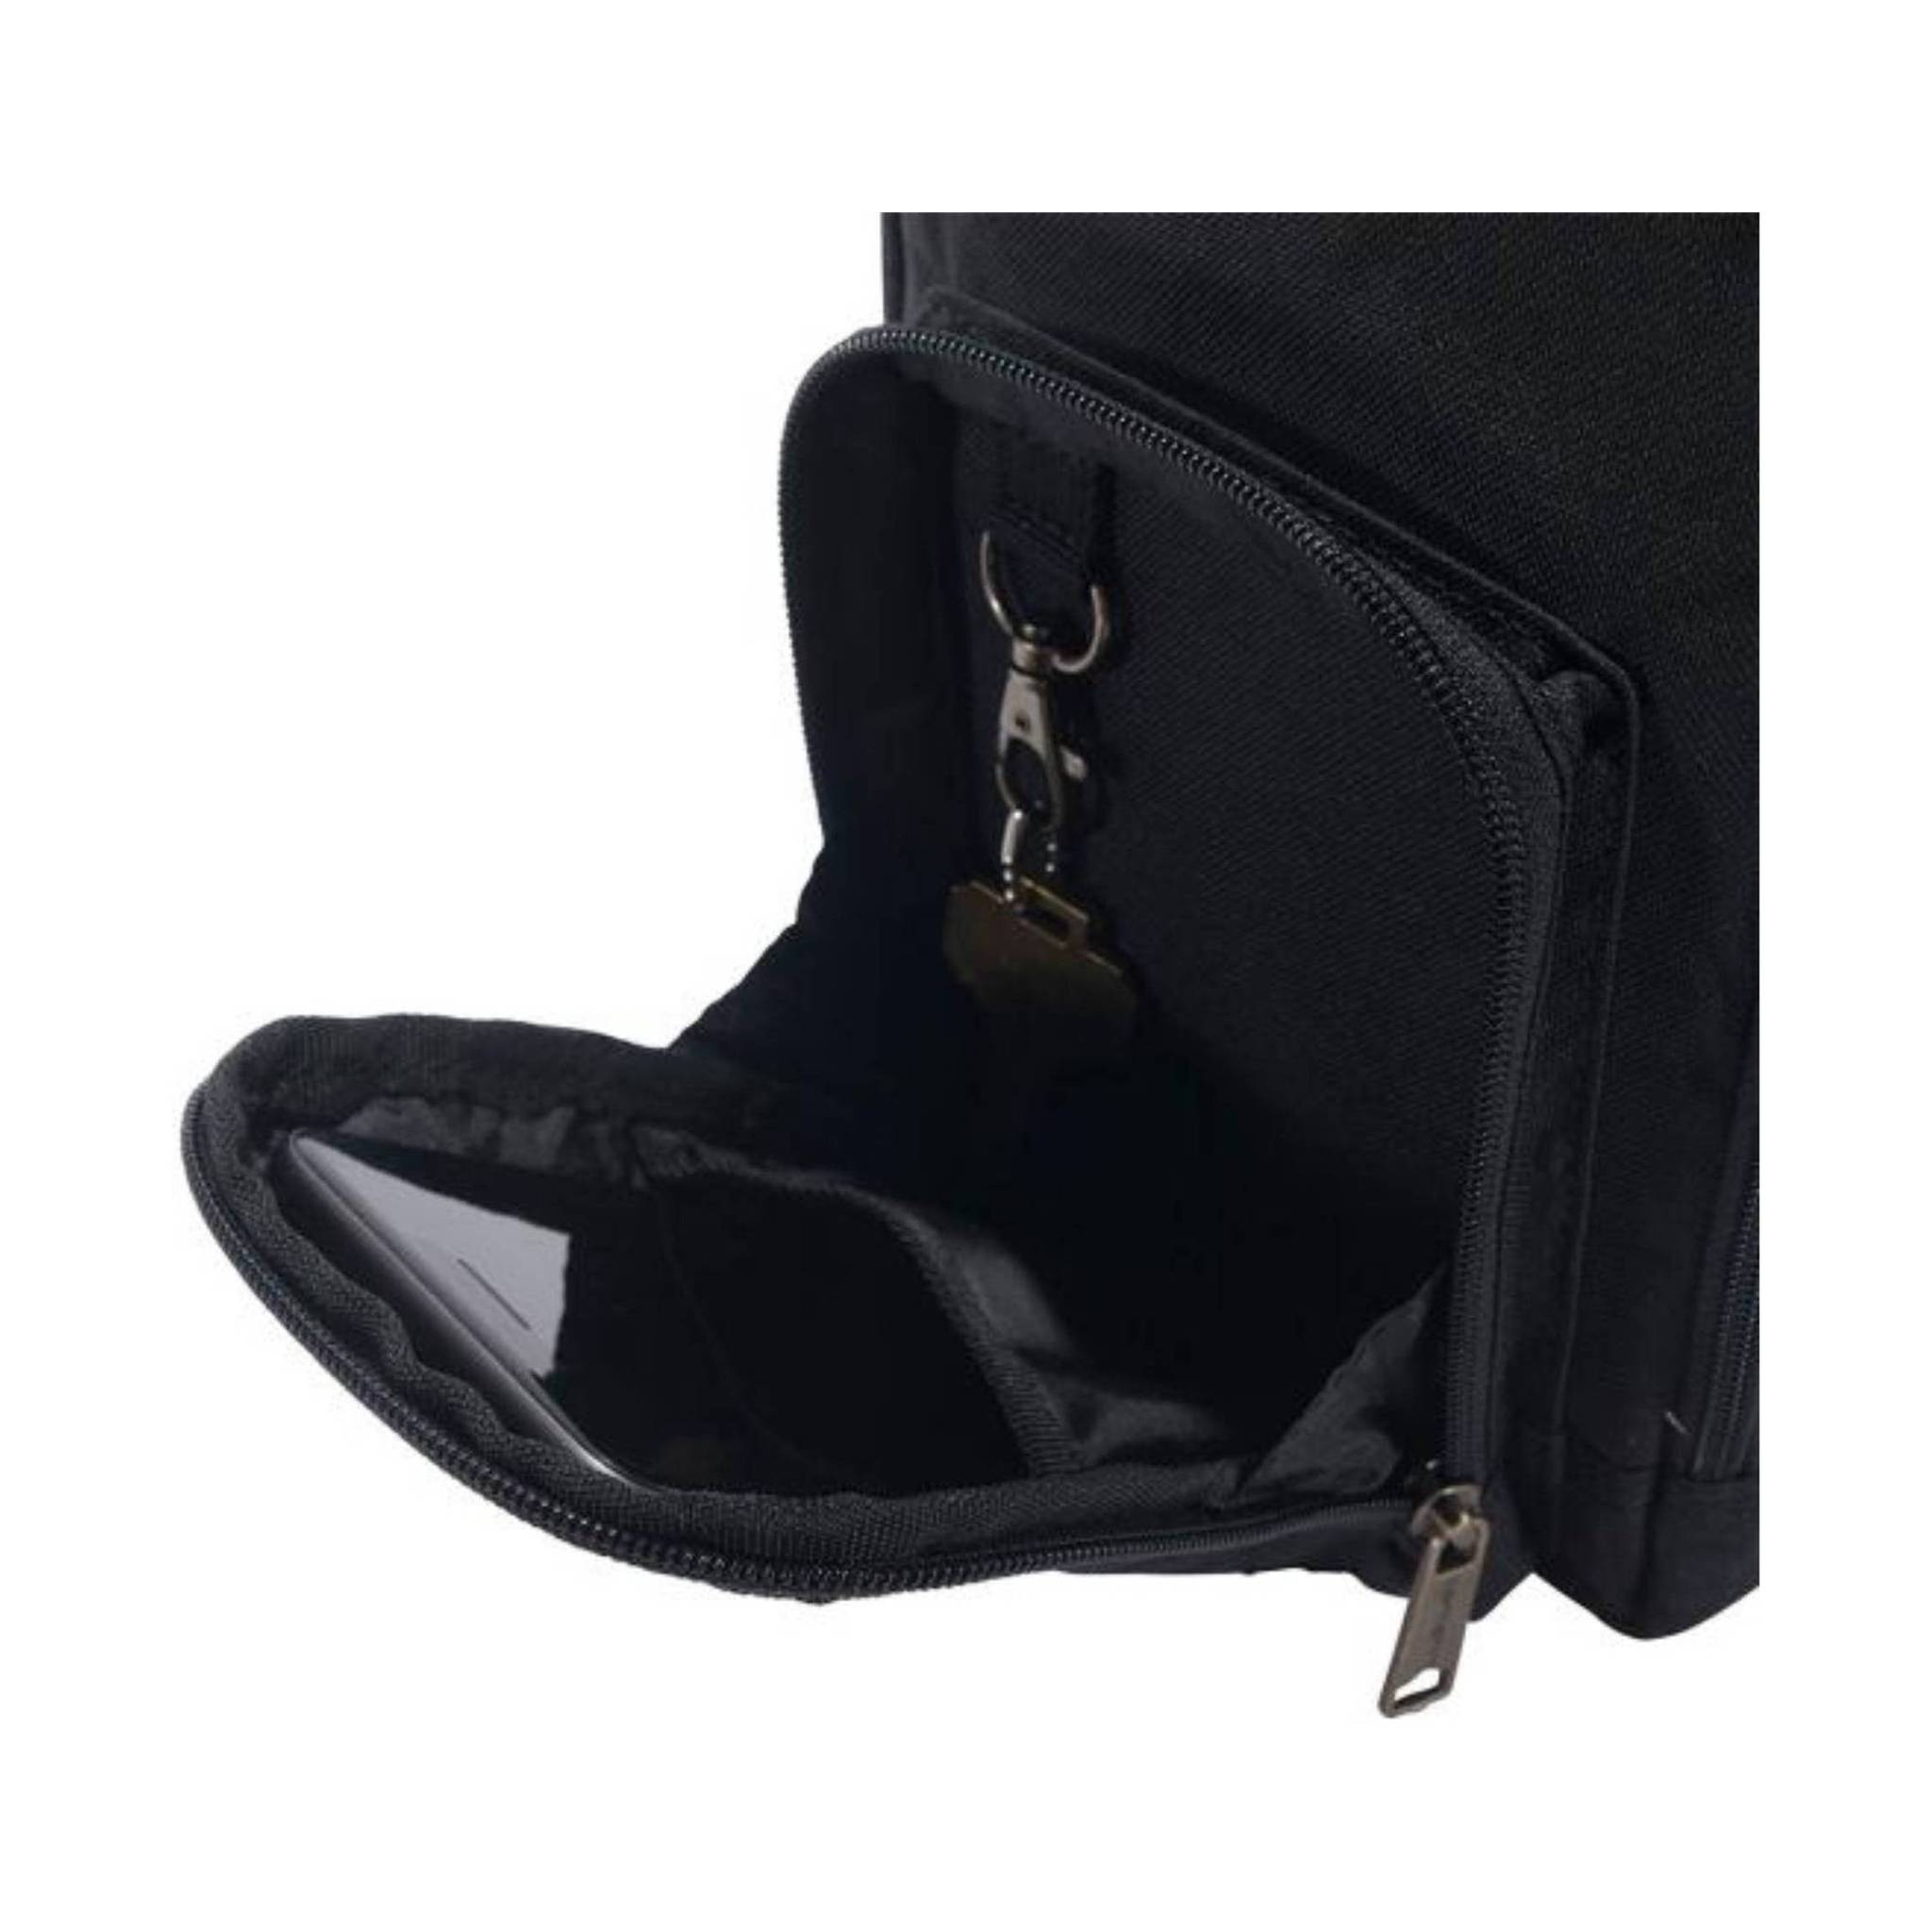 Carhartt Unisex Adult Zip, Durable, Adjustable Crossbody Bag with Zipper  Closure, Black, One Size